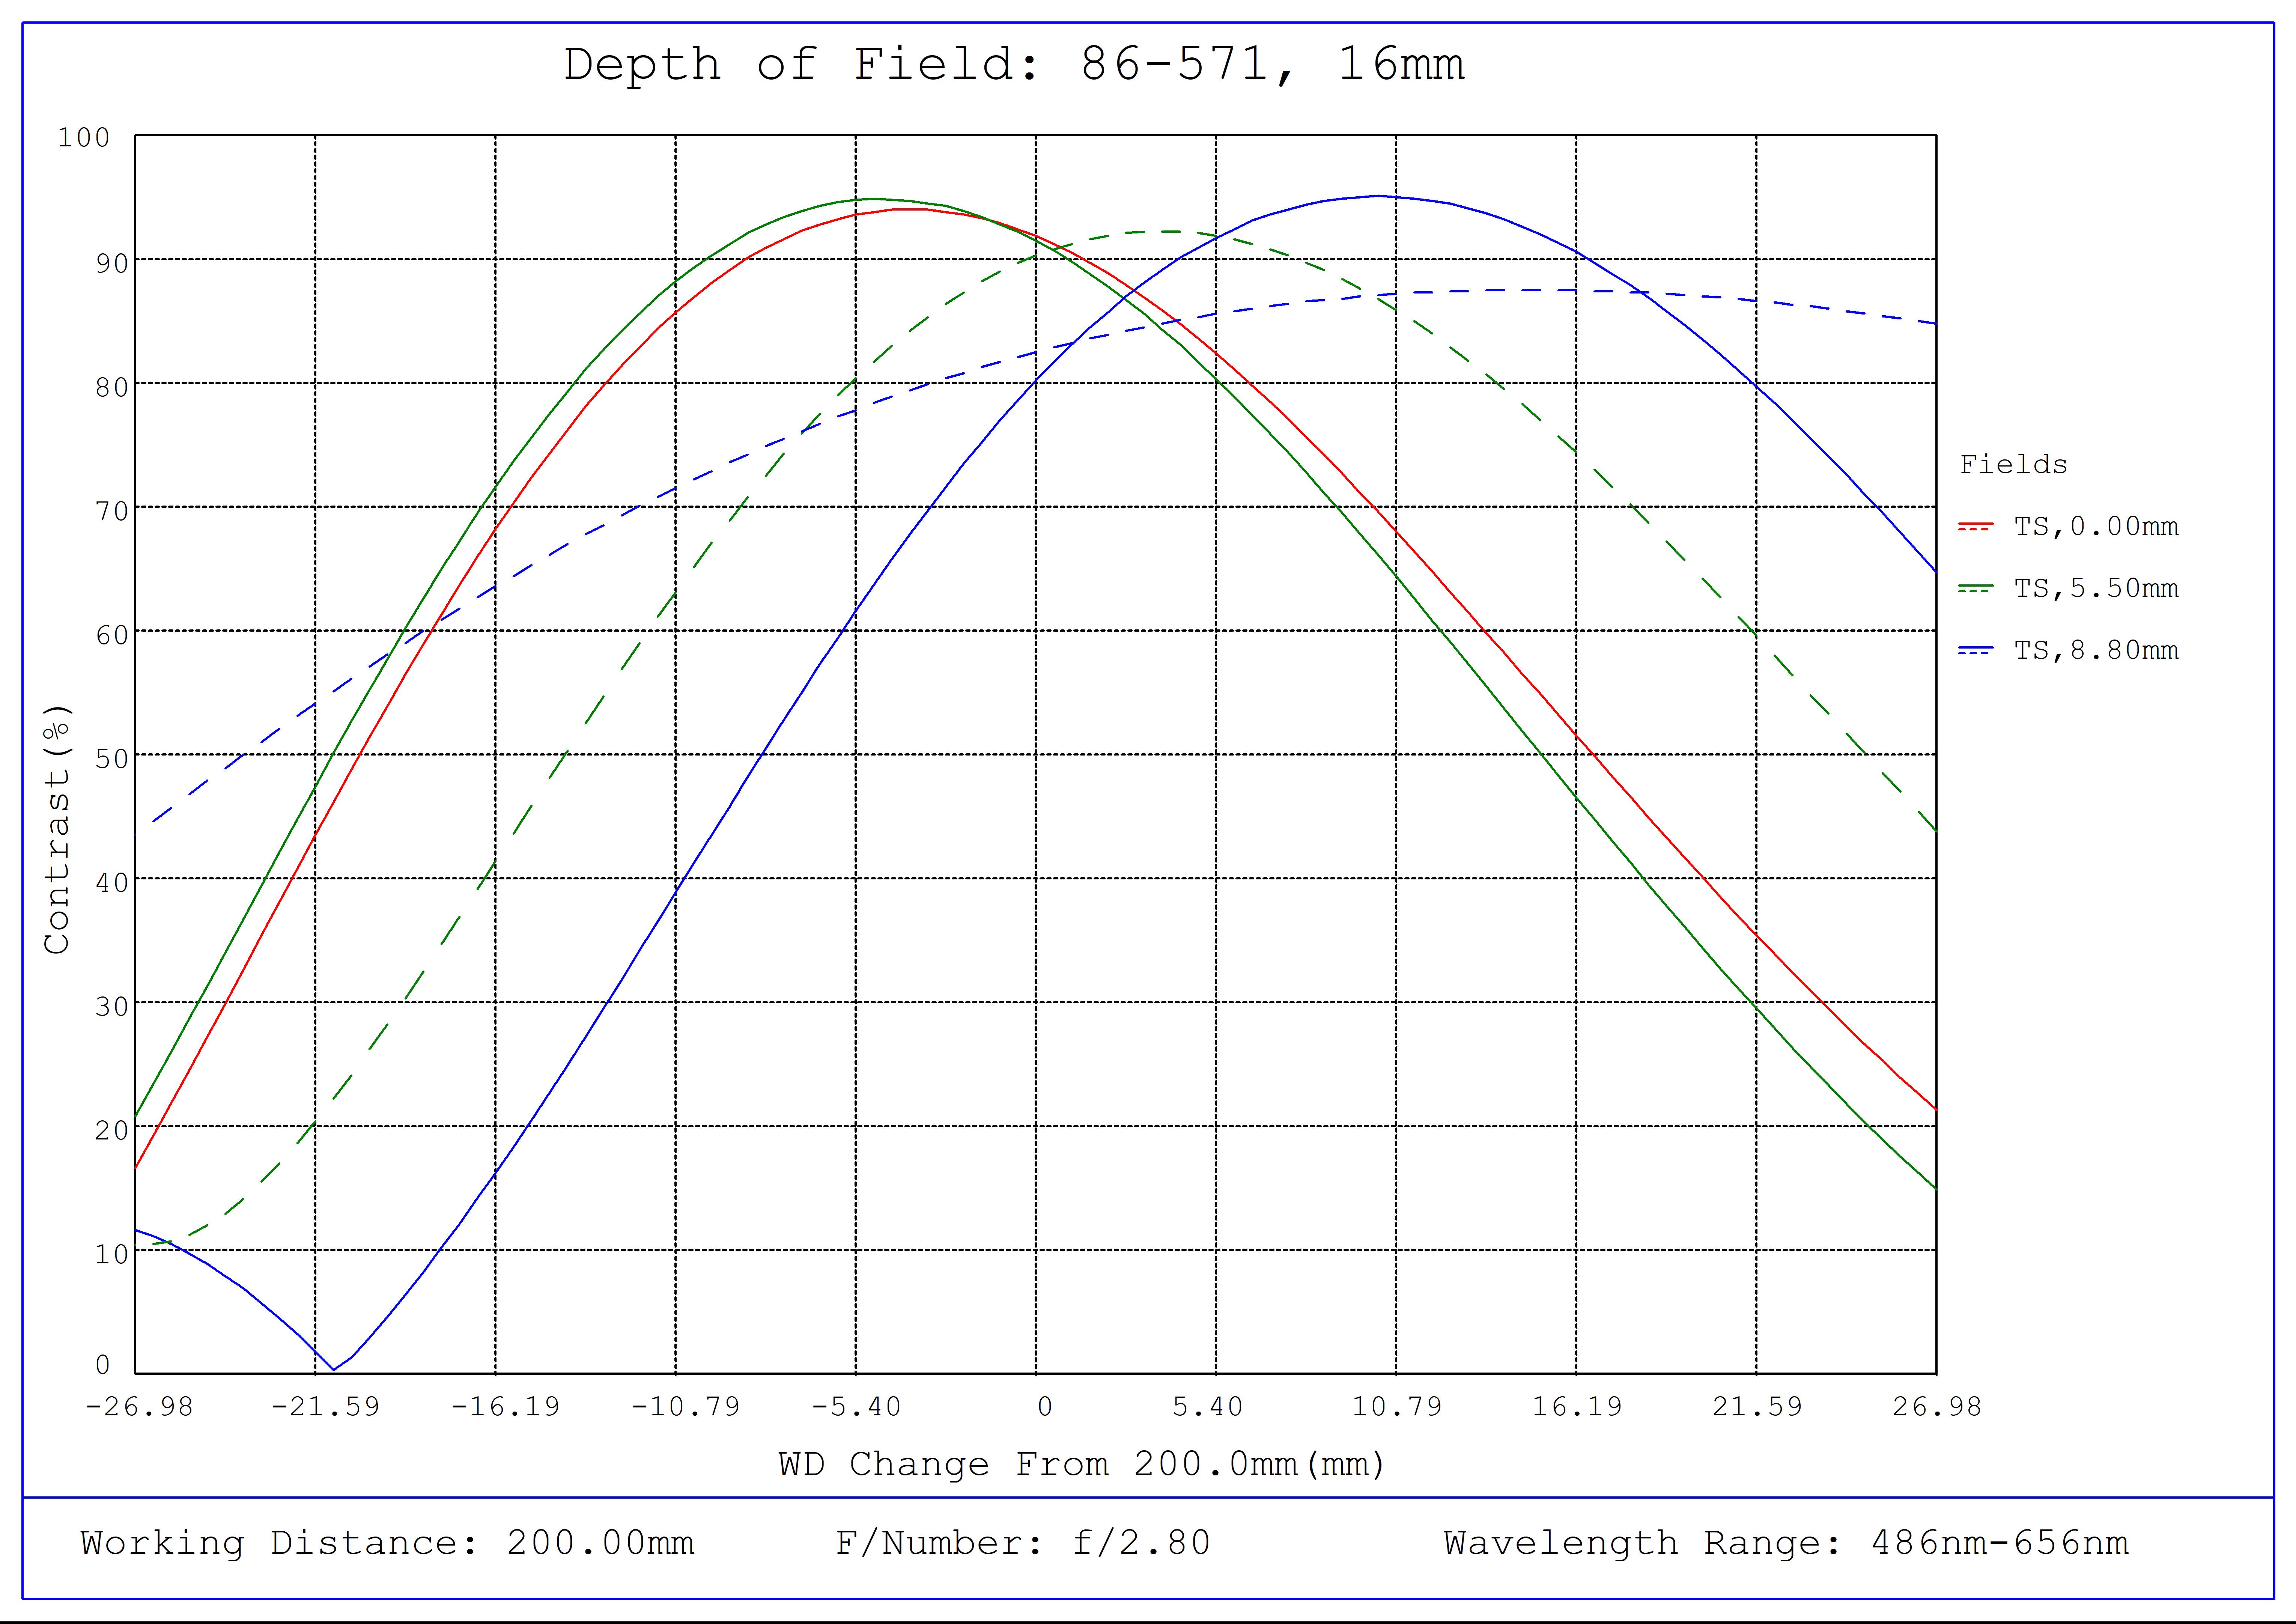 #86-571, 16mm Focal Length, HP Series Fixed Focal Length Lens, Depth of Field Plot, 200mm Working Distance, f2.8